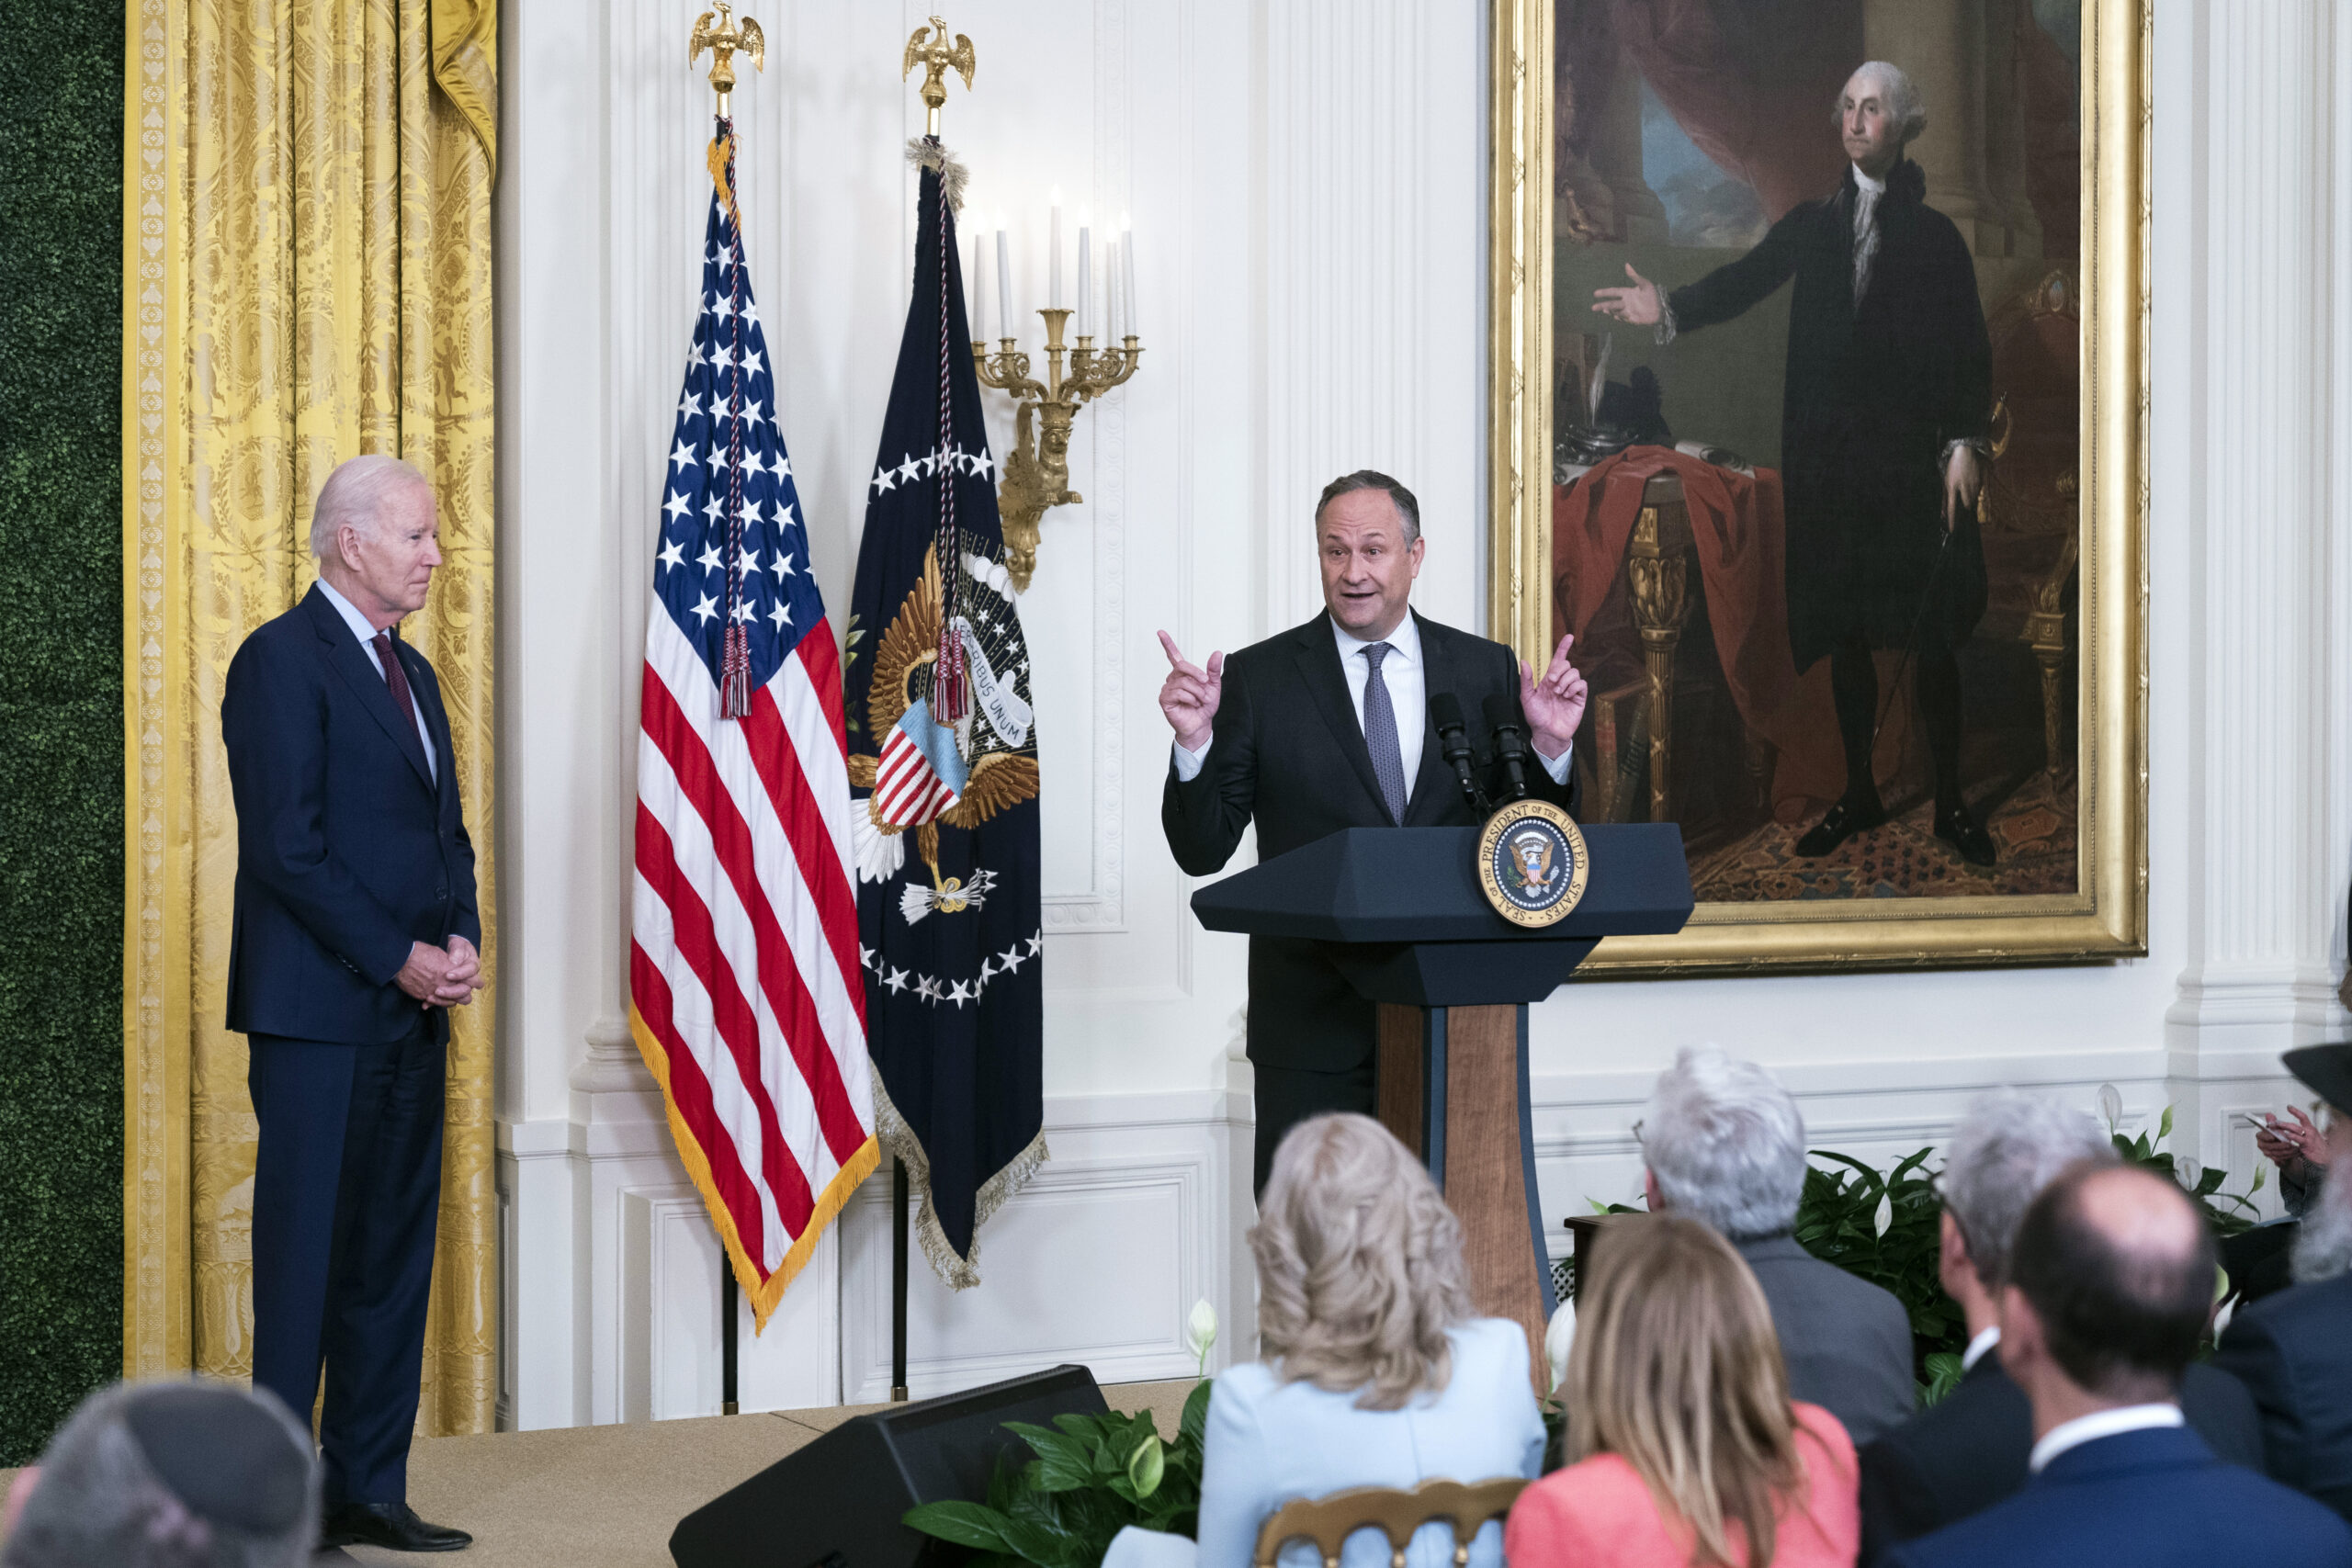 Doug Emhoff, husband of Vice President Kamala Harris, introduces President Joe Biden during the cel...